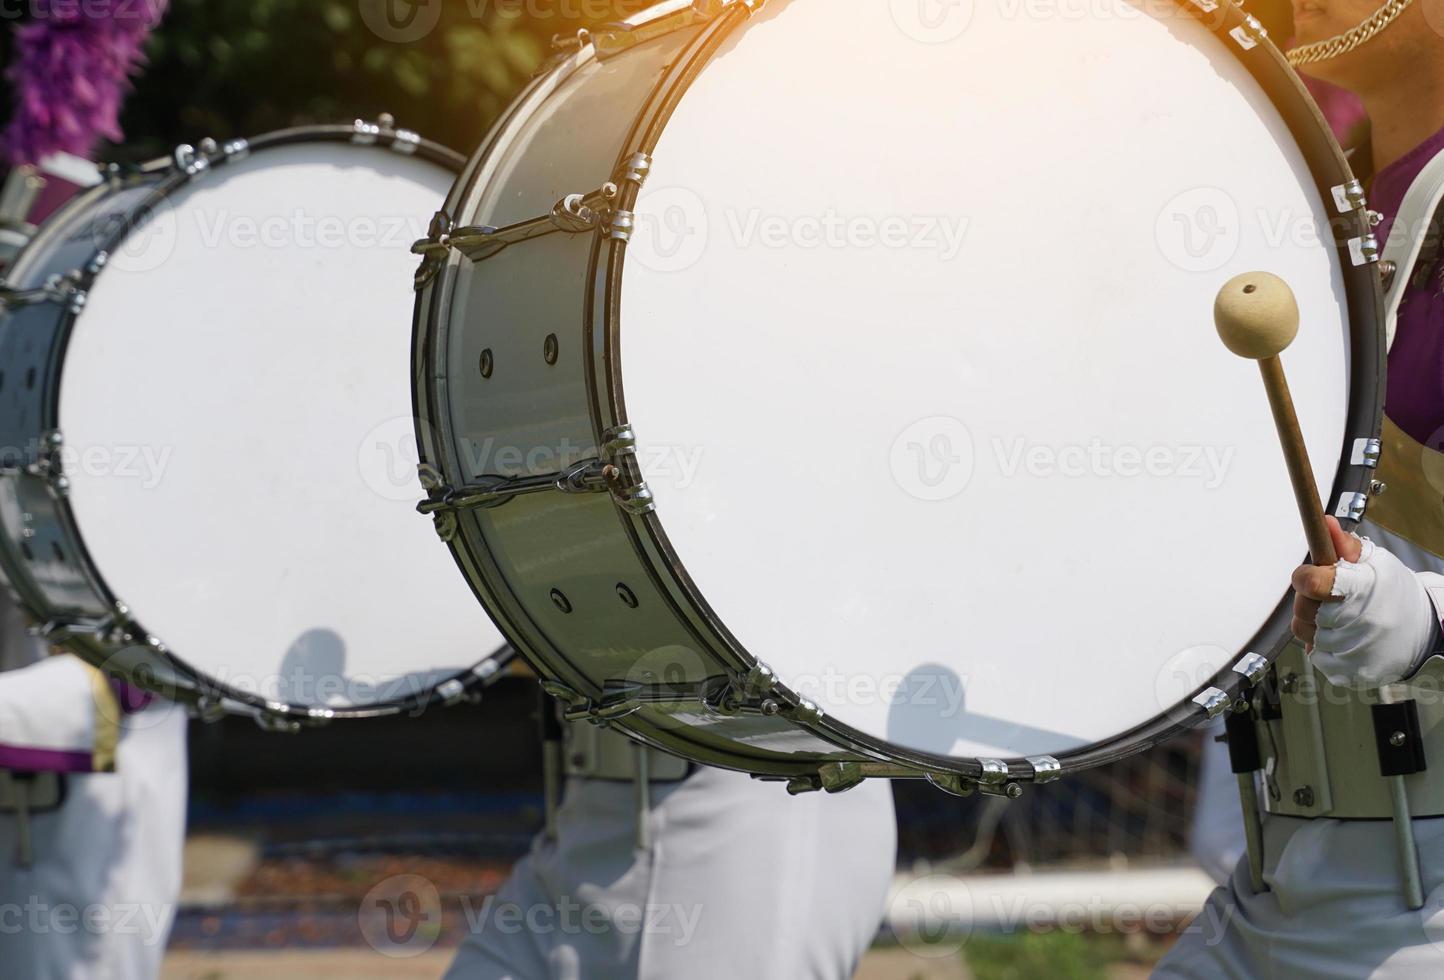 grandes tambores, tambores de desfile da orquestra do colégio no desfile do dia dos esportes. foco suave e seletivo. foto